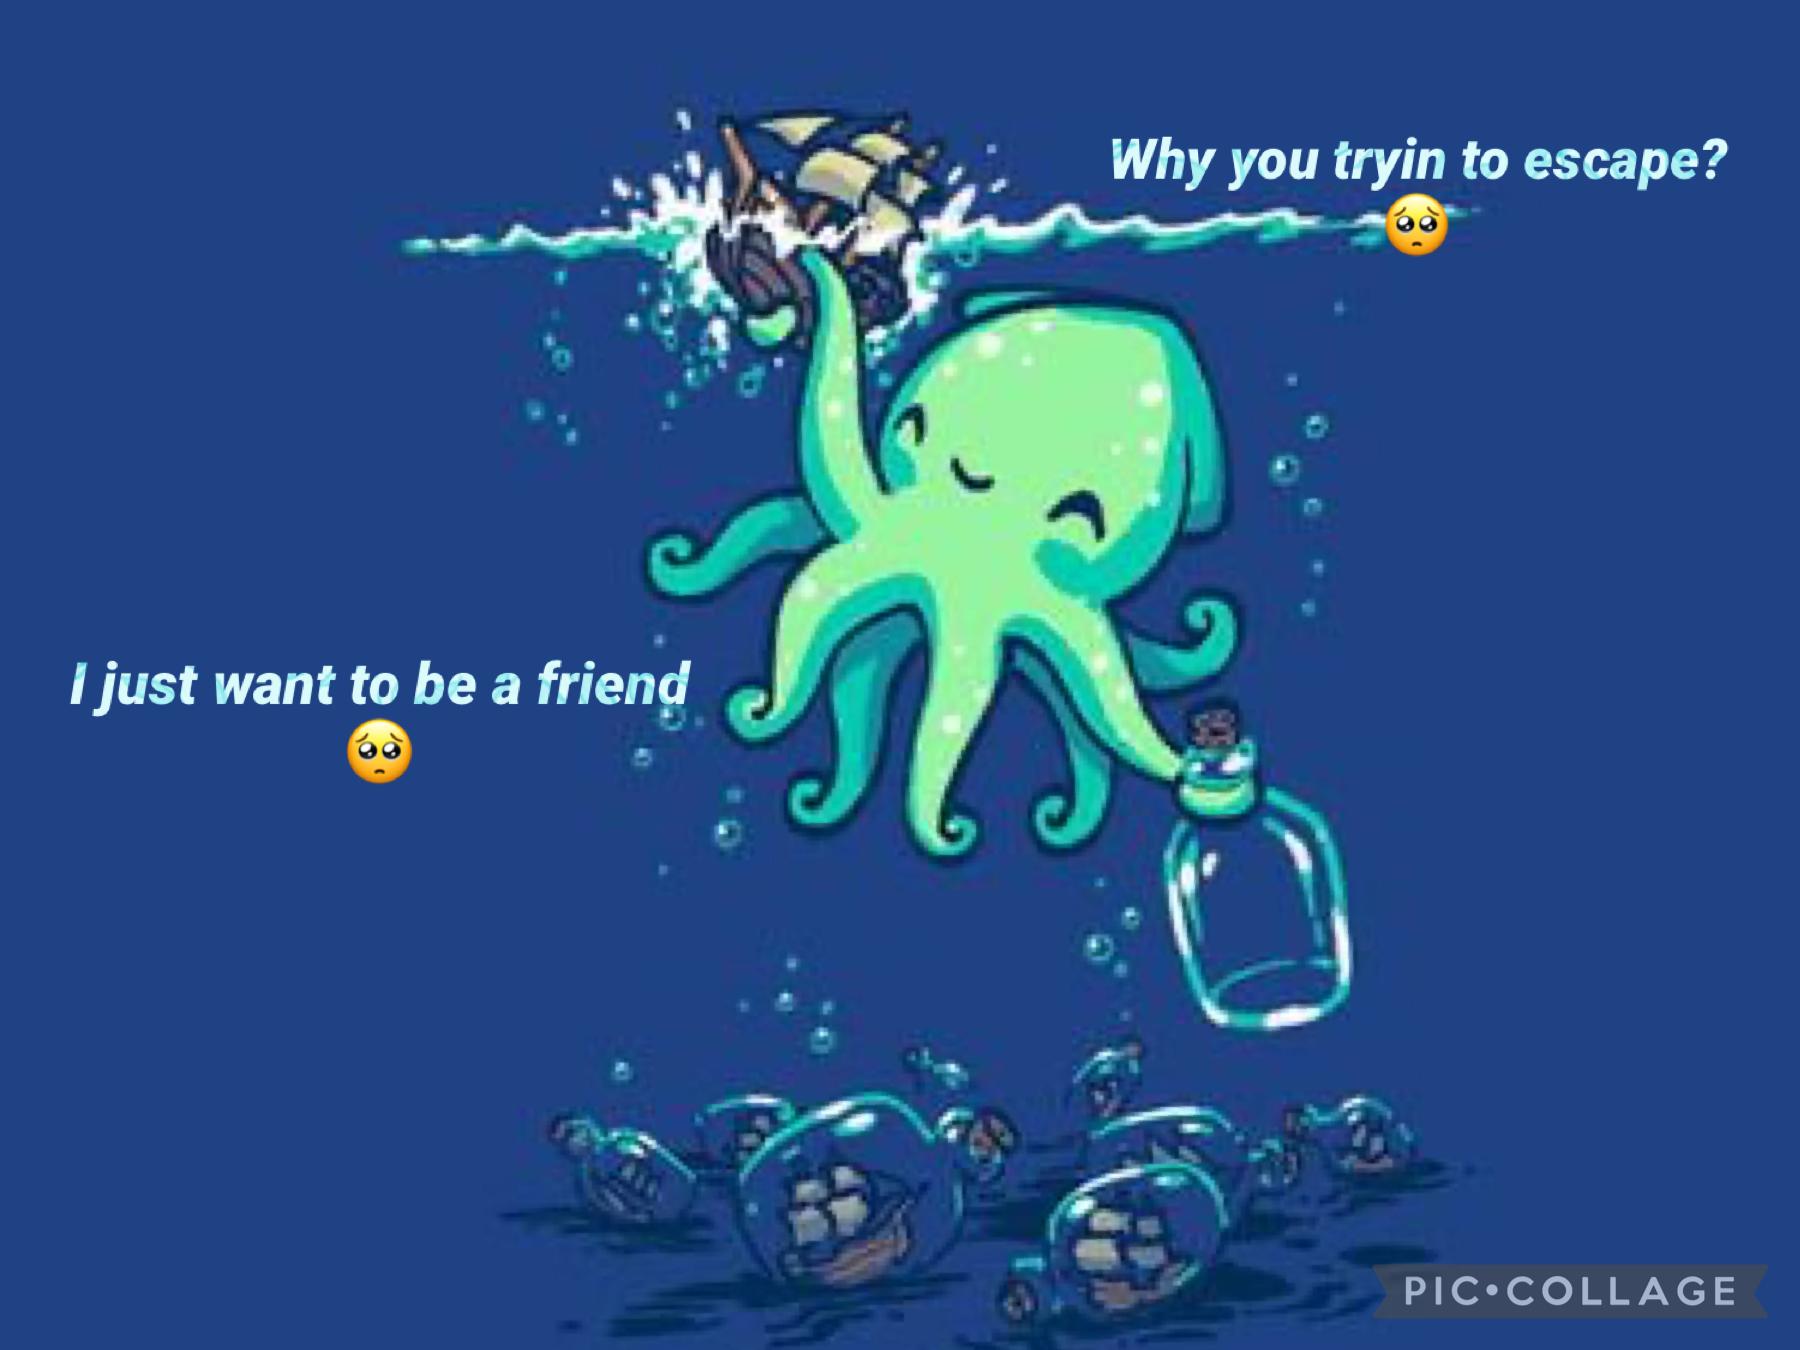 Aww poor lonely kraken!🥰